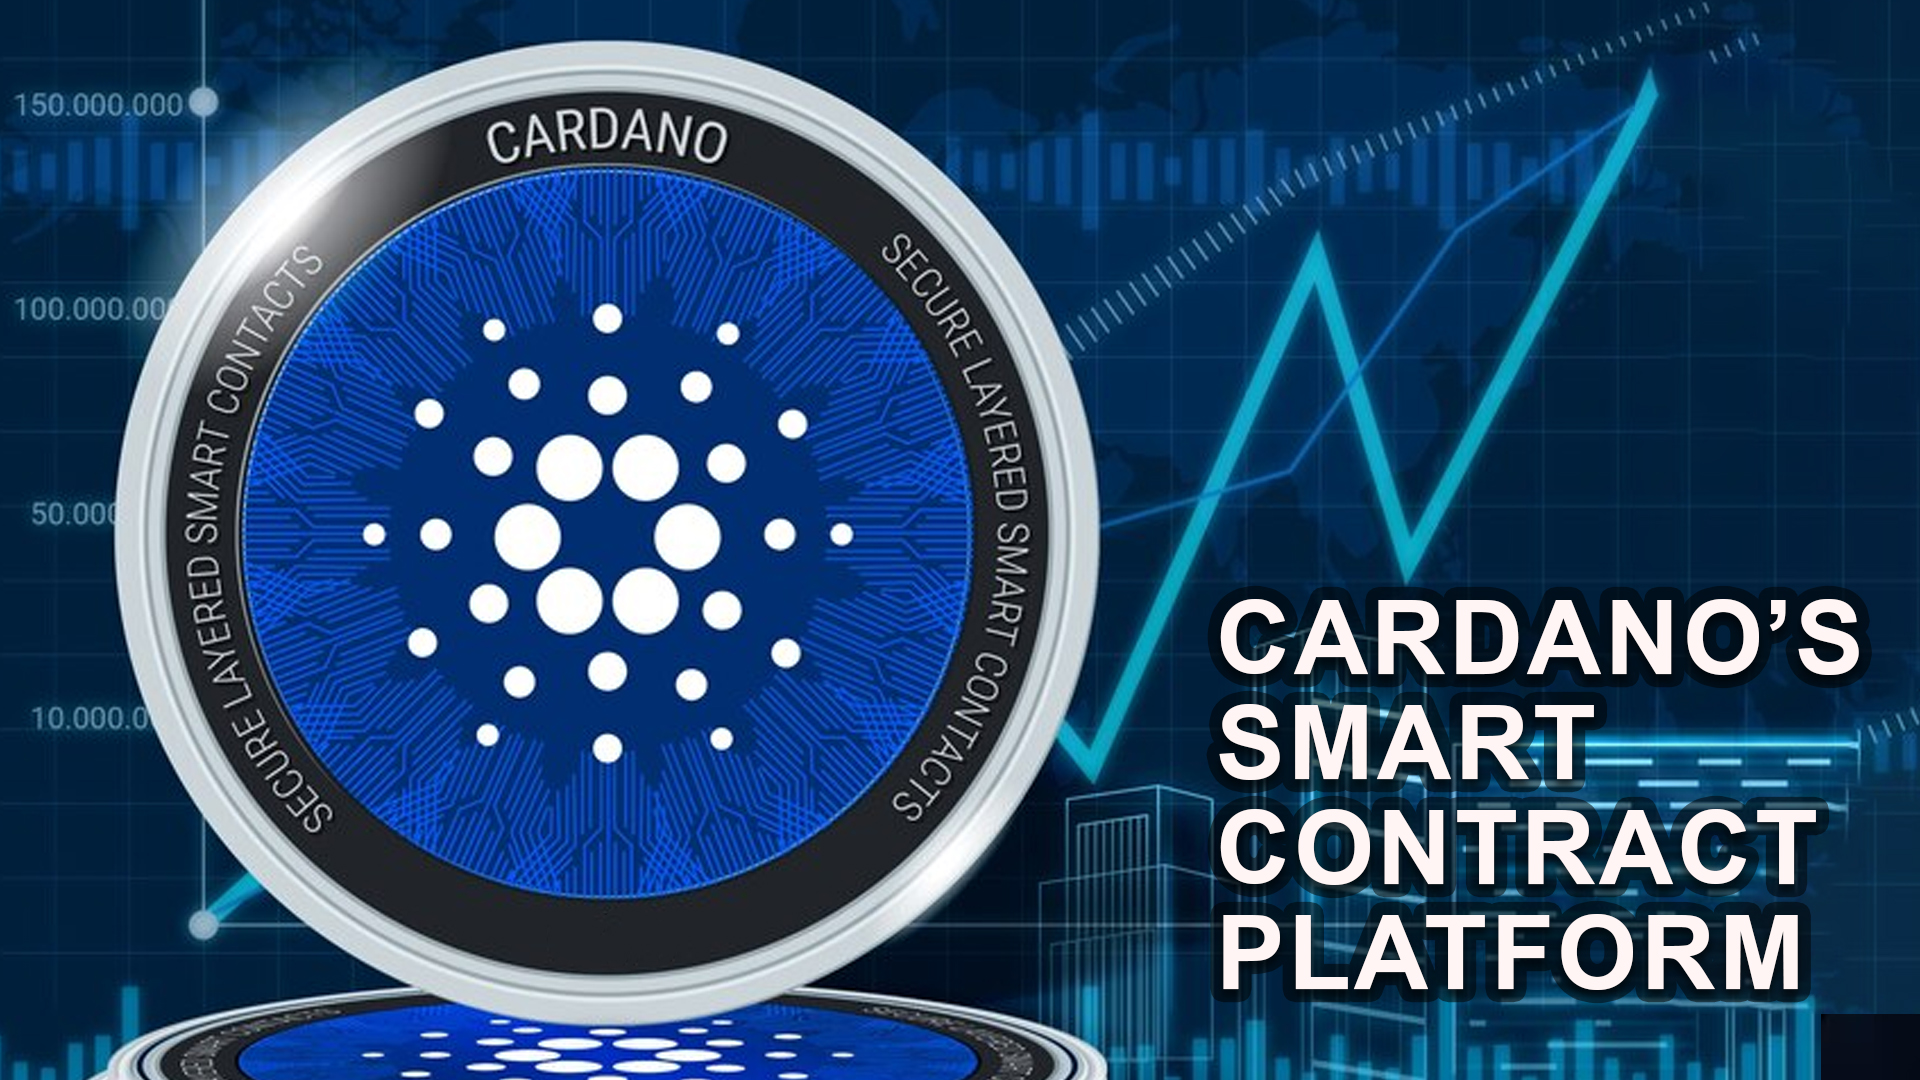 Is Cardano’s Smart Contract Platform a Revolutionary Concept